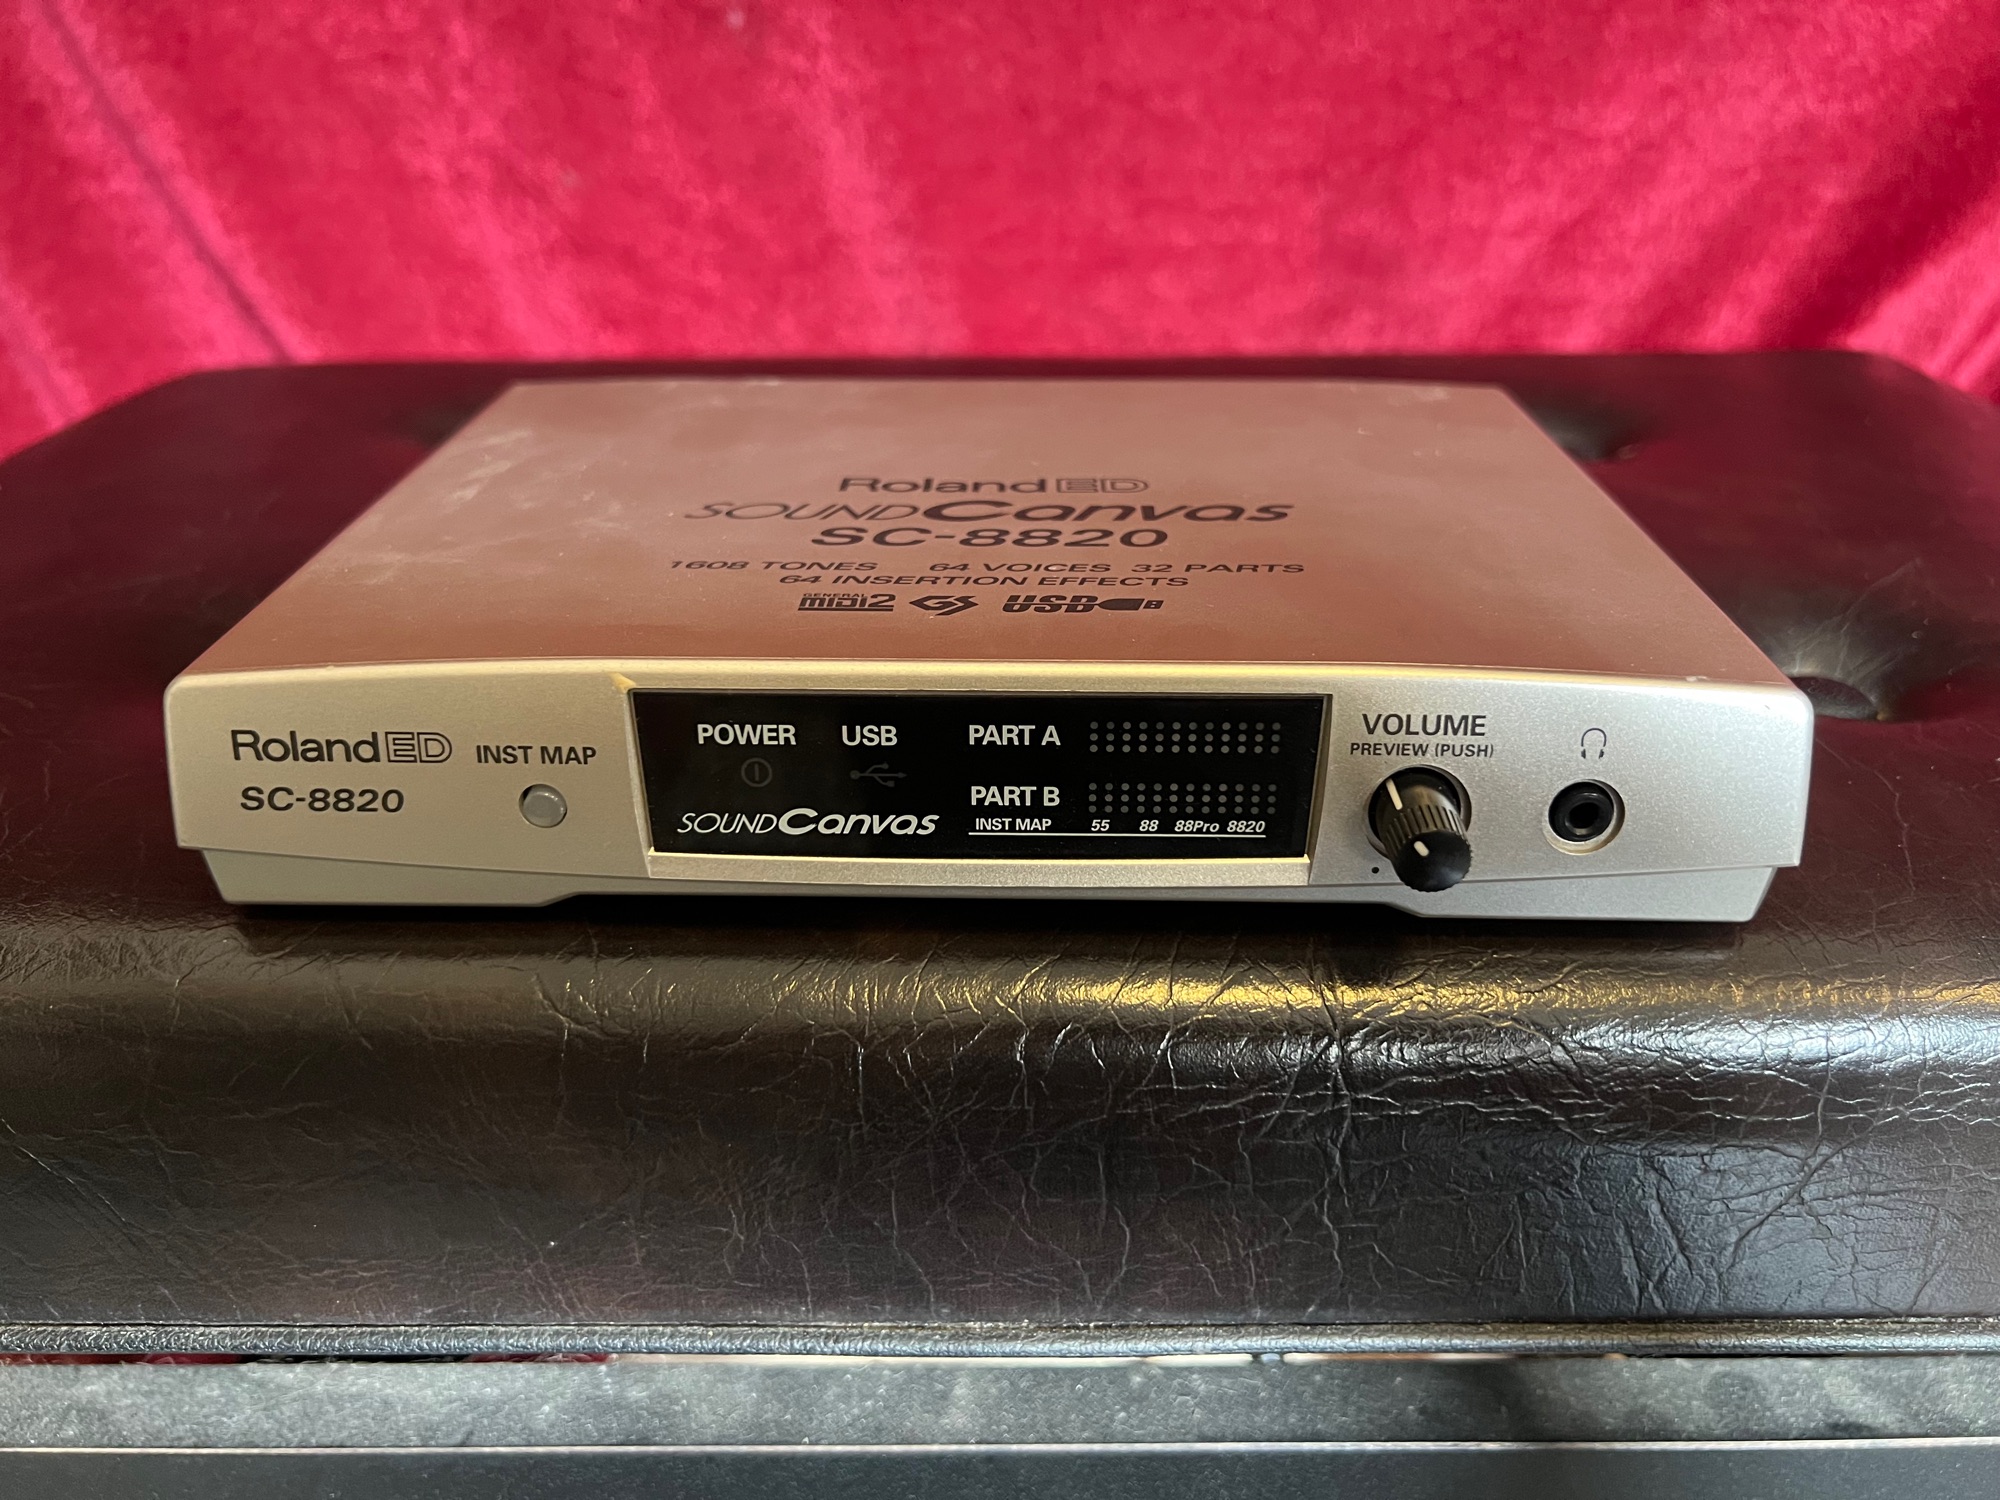 sound canvas Roland ED รุ่น SC-8820 มือสอง | Lazada.co.th